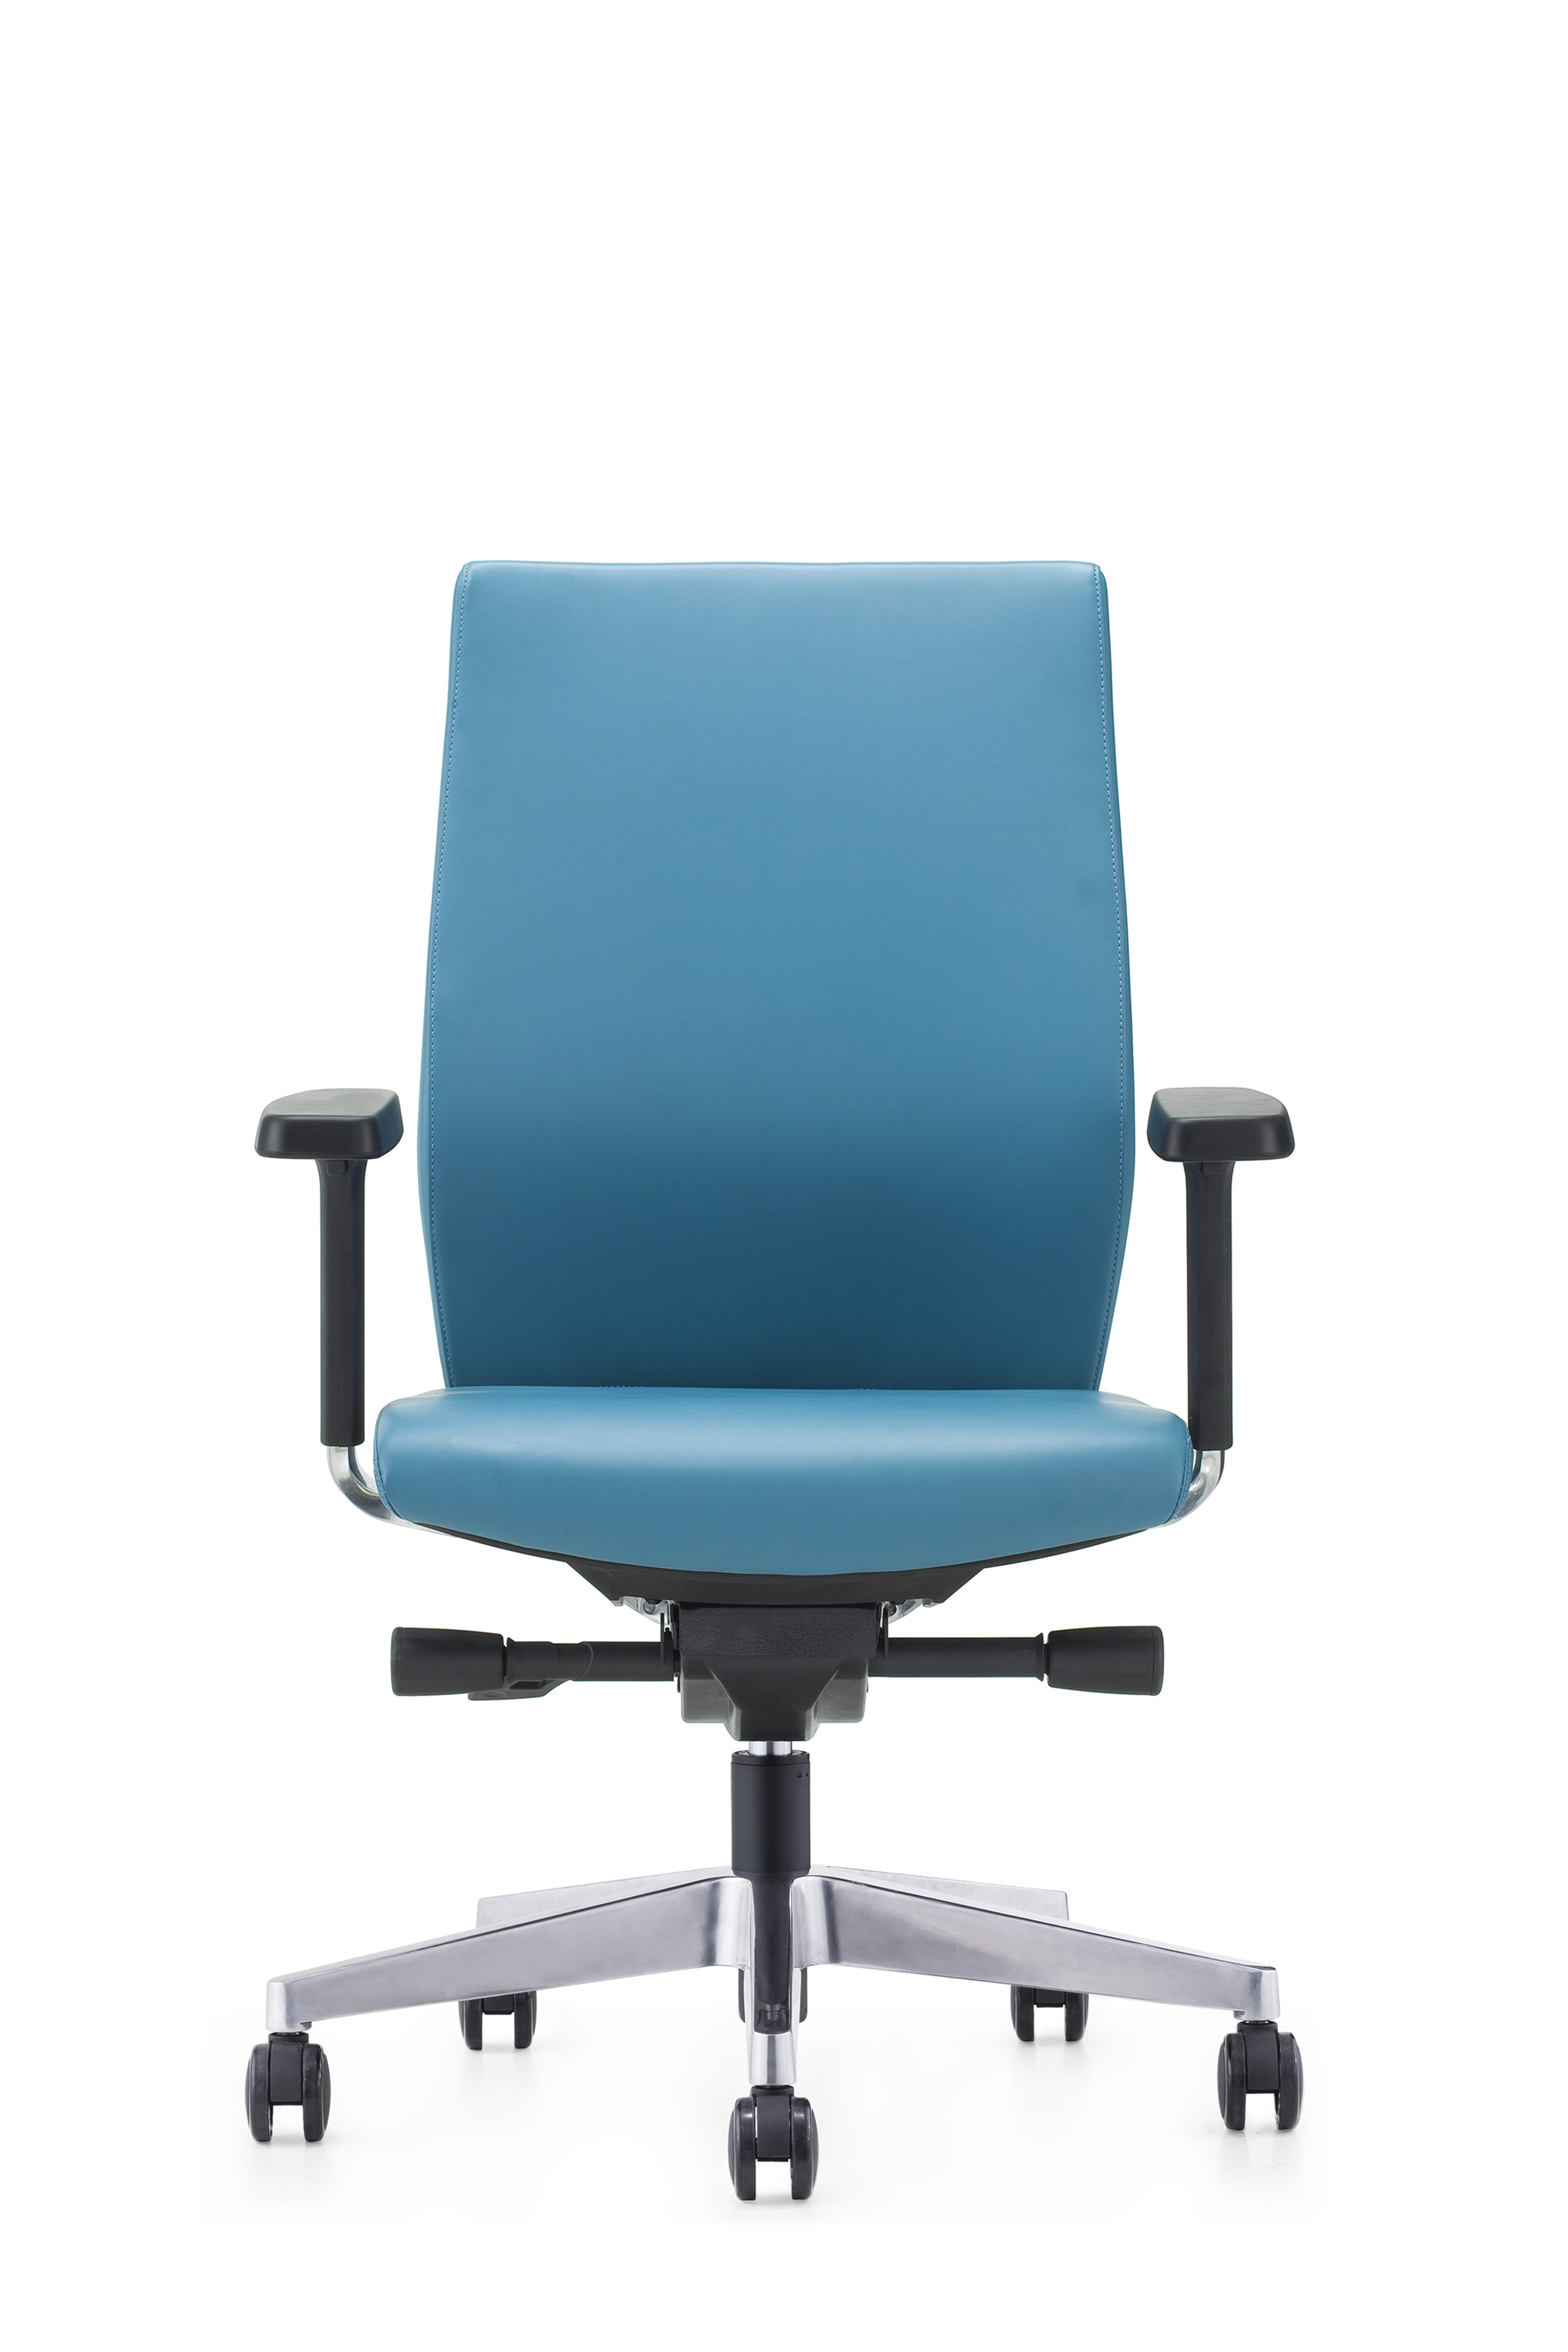 2018 New Style High Quality Swivel Mesh Chair - CH-240B – SitZone